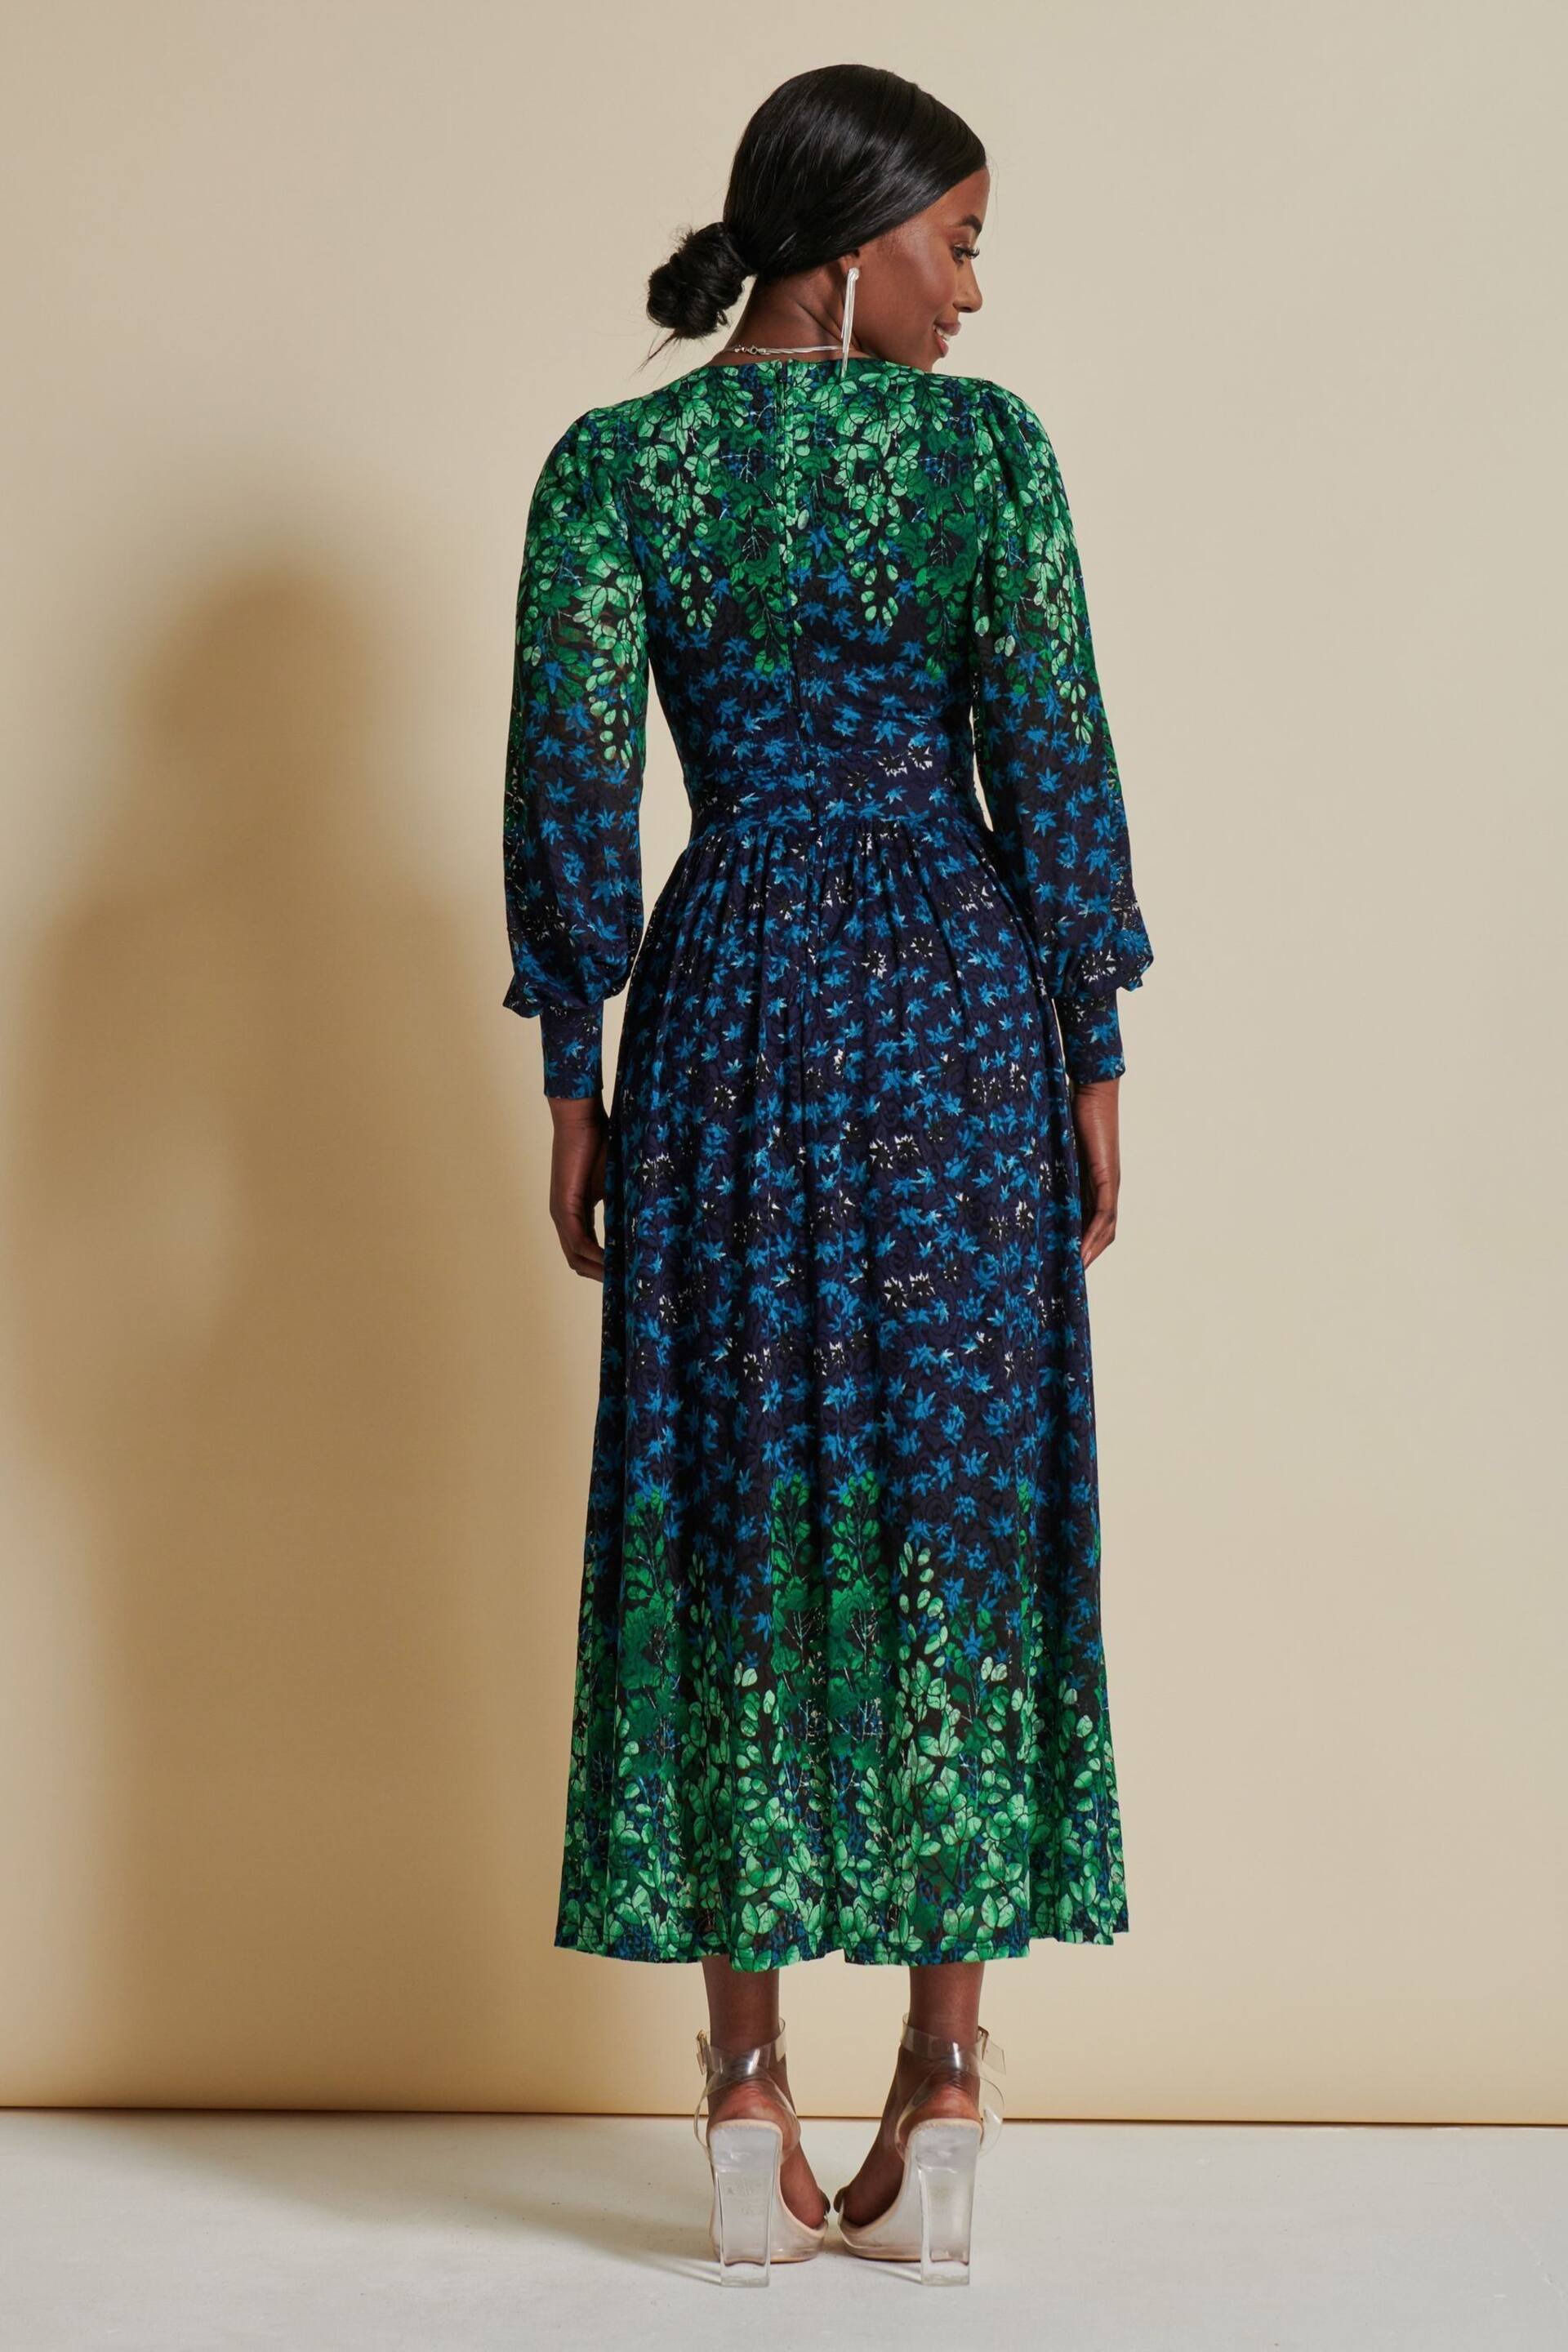 Jolie Moi Blue Quiyn Symmetrical Print Lace Maxi Dress - Image 2 of 6